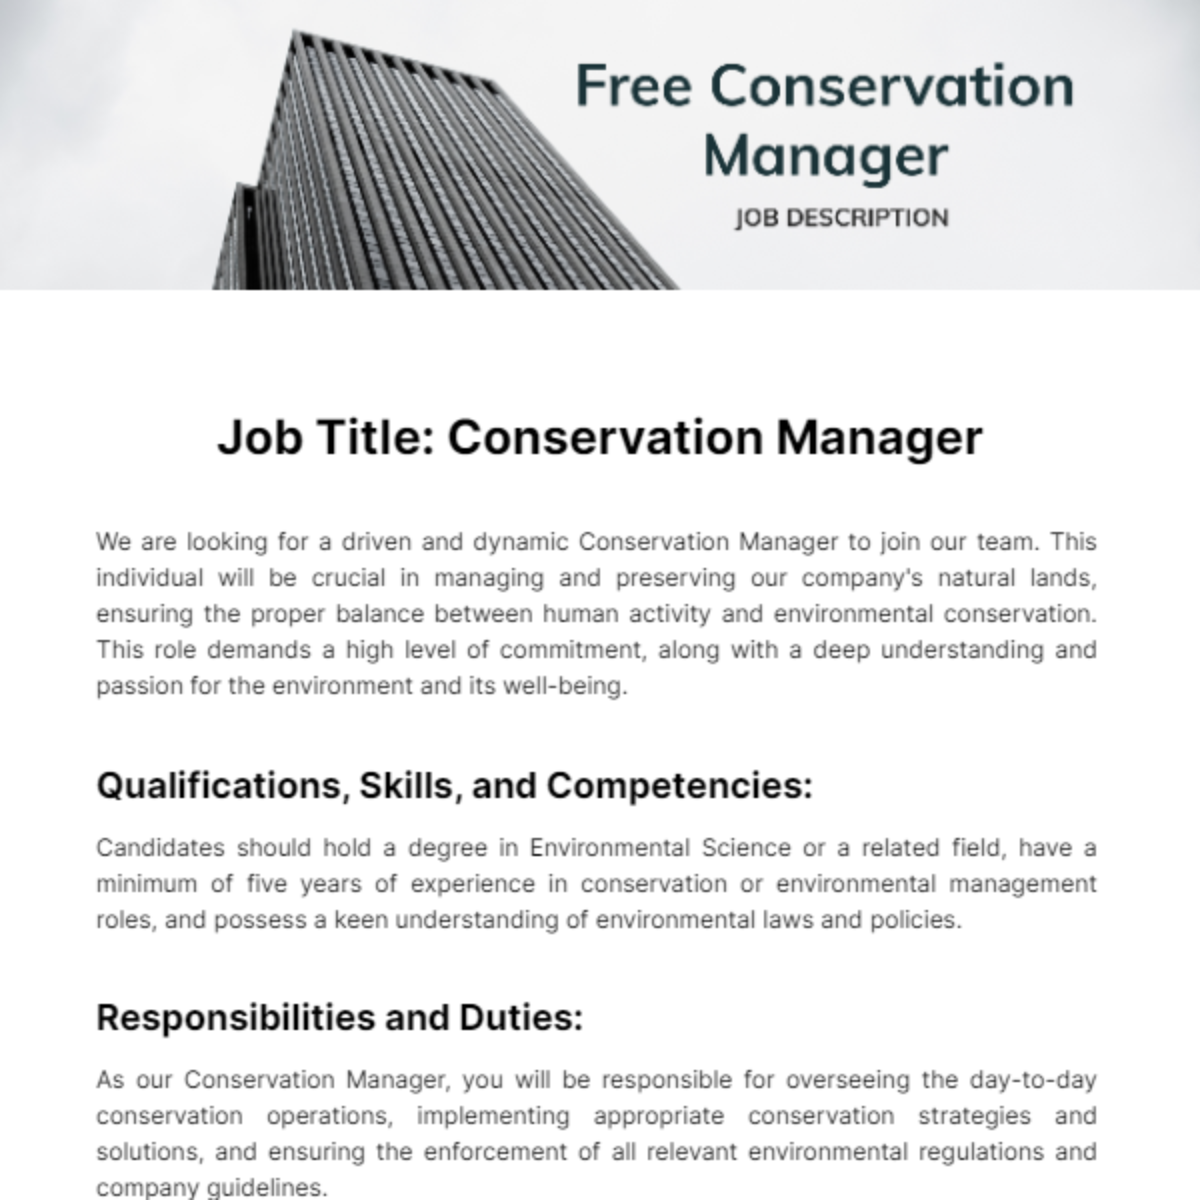 Free Conservation Manager Job Description Template